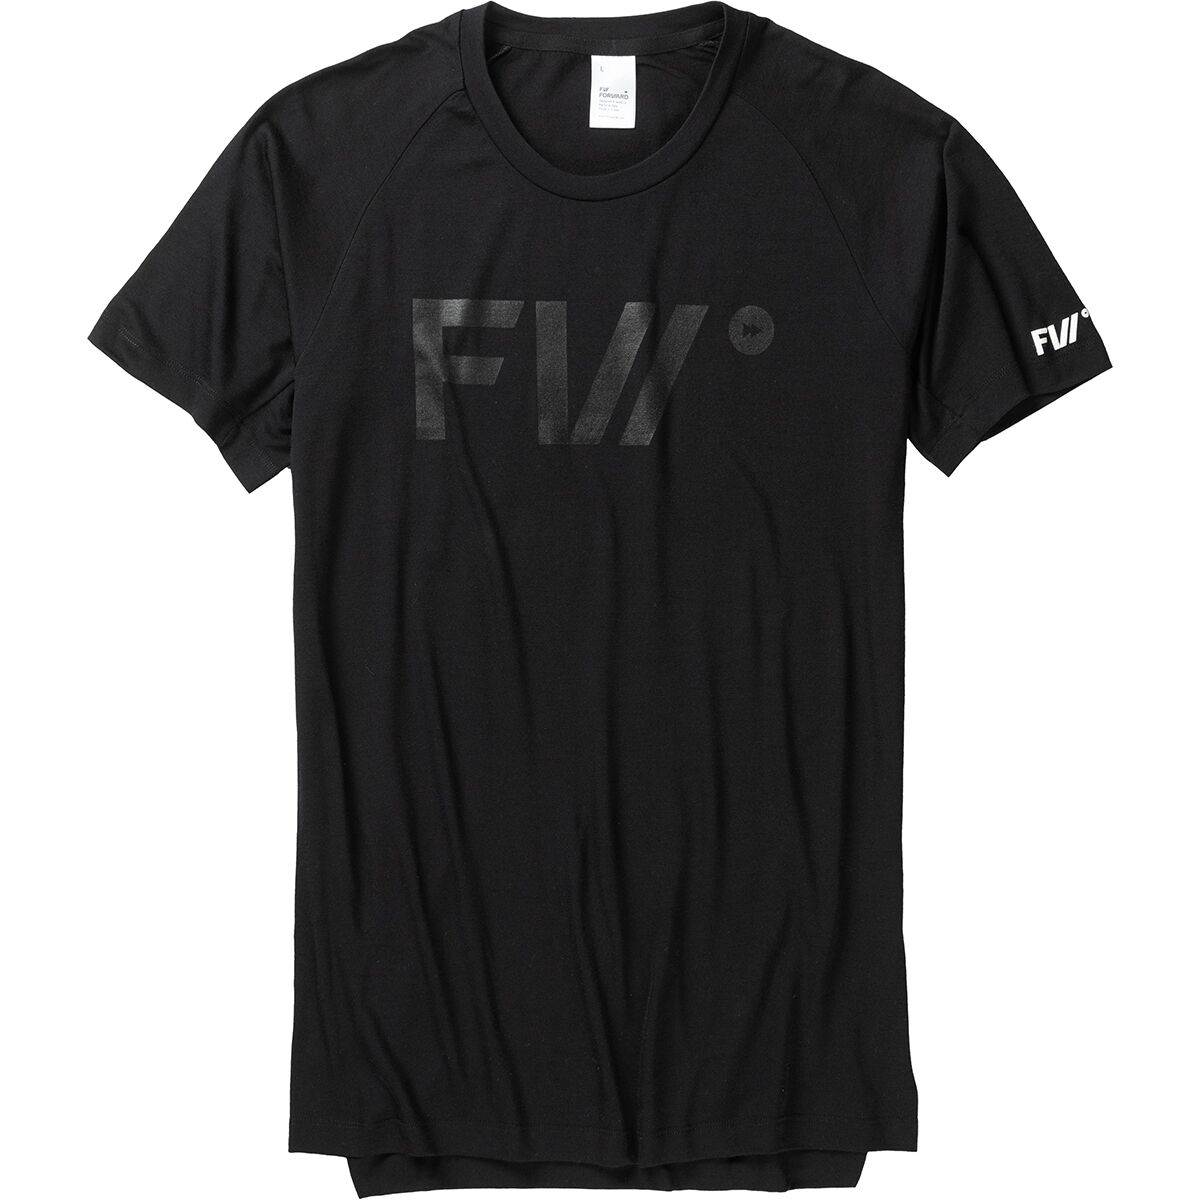 Fw apparel легкая футболка с короткими рукавами raw Fw Apparel, черный цена и фото